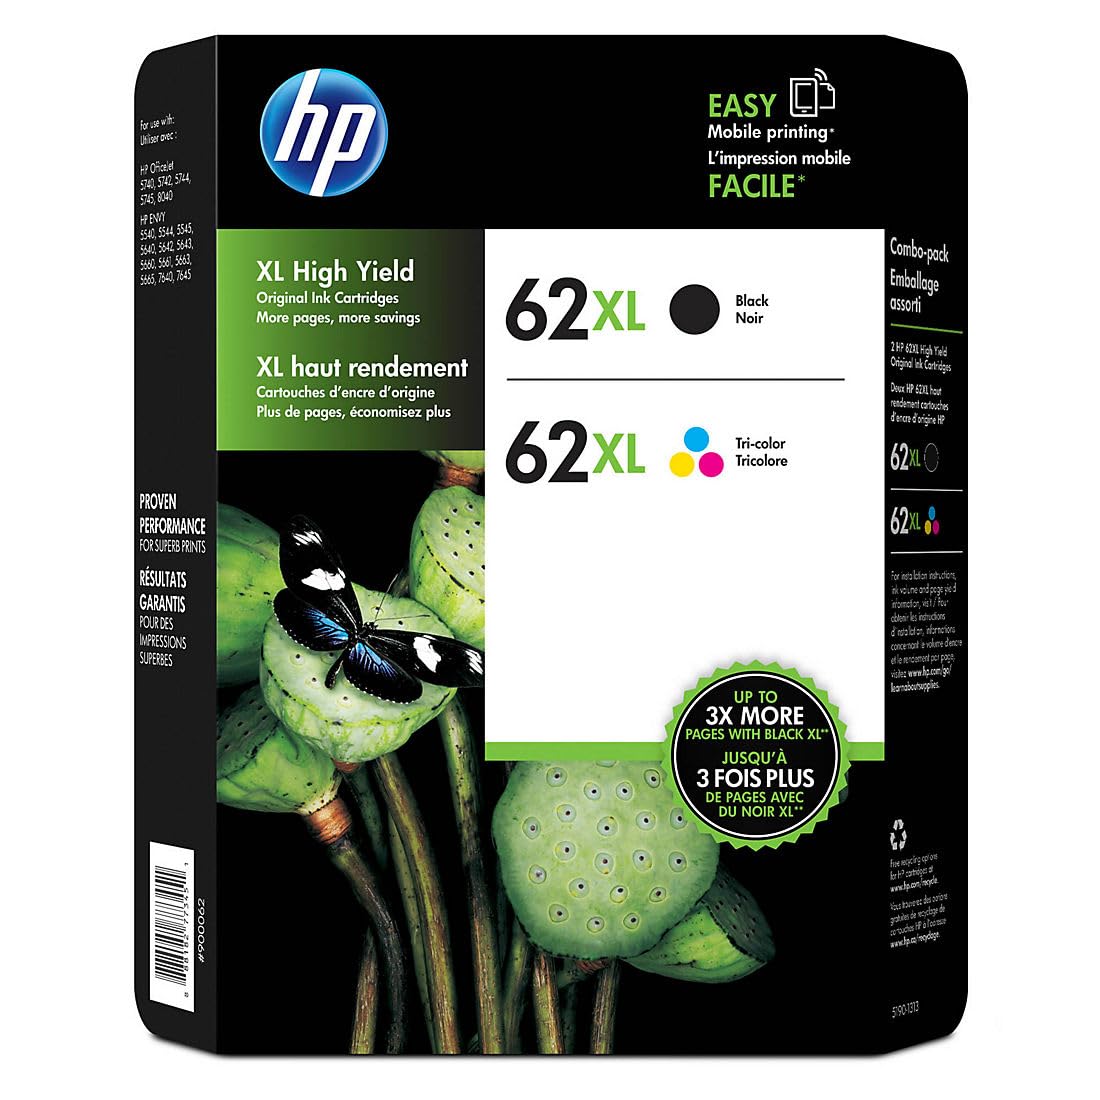  HP असली 62Xl हाई यील्ड ब्लैक और हाई यील्ड ट्राई-कलर जेटडायरेक्ट प्रिंट कार्ट्रिज...